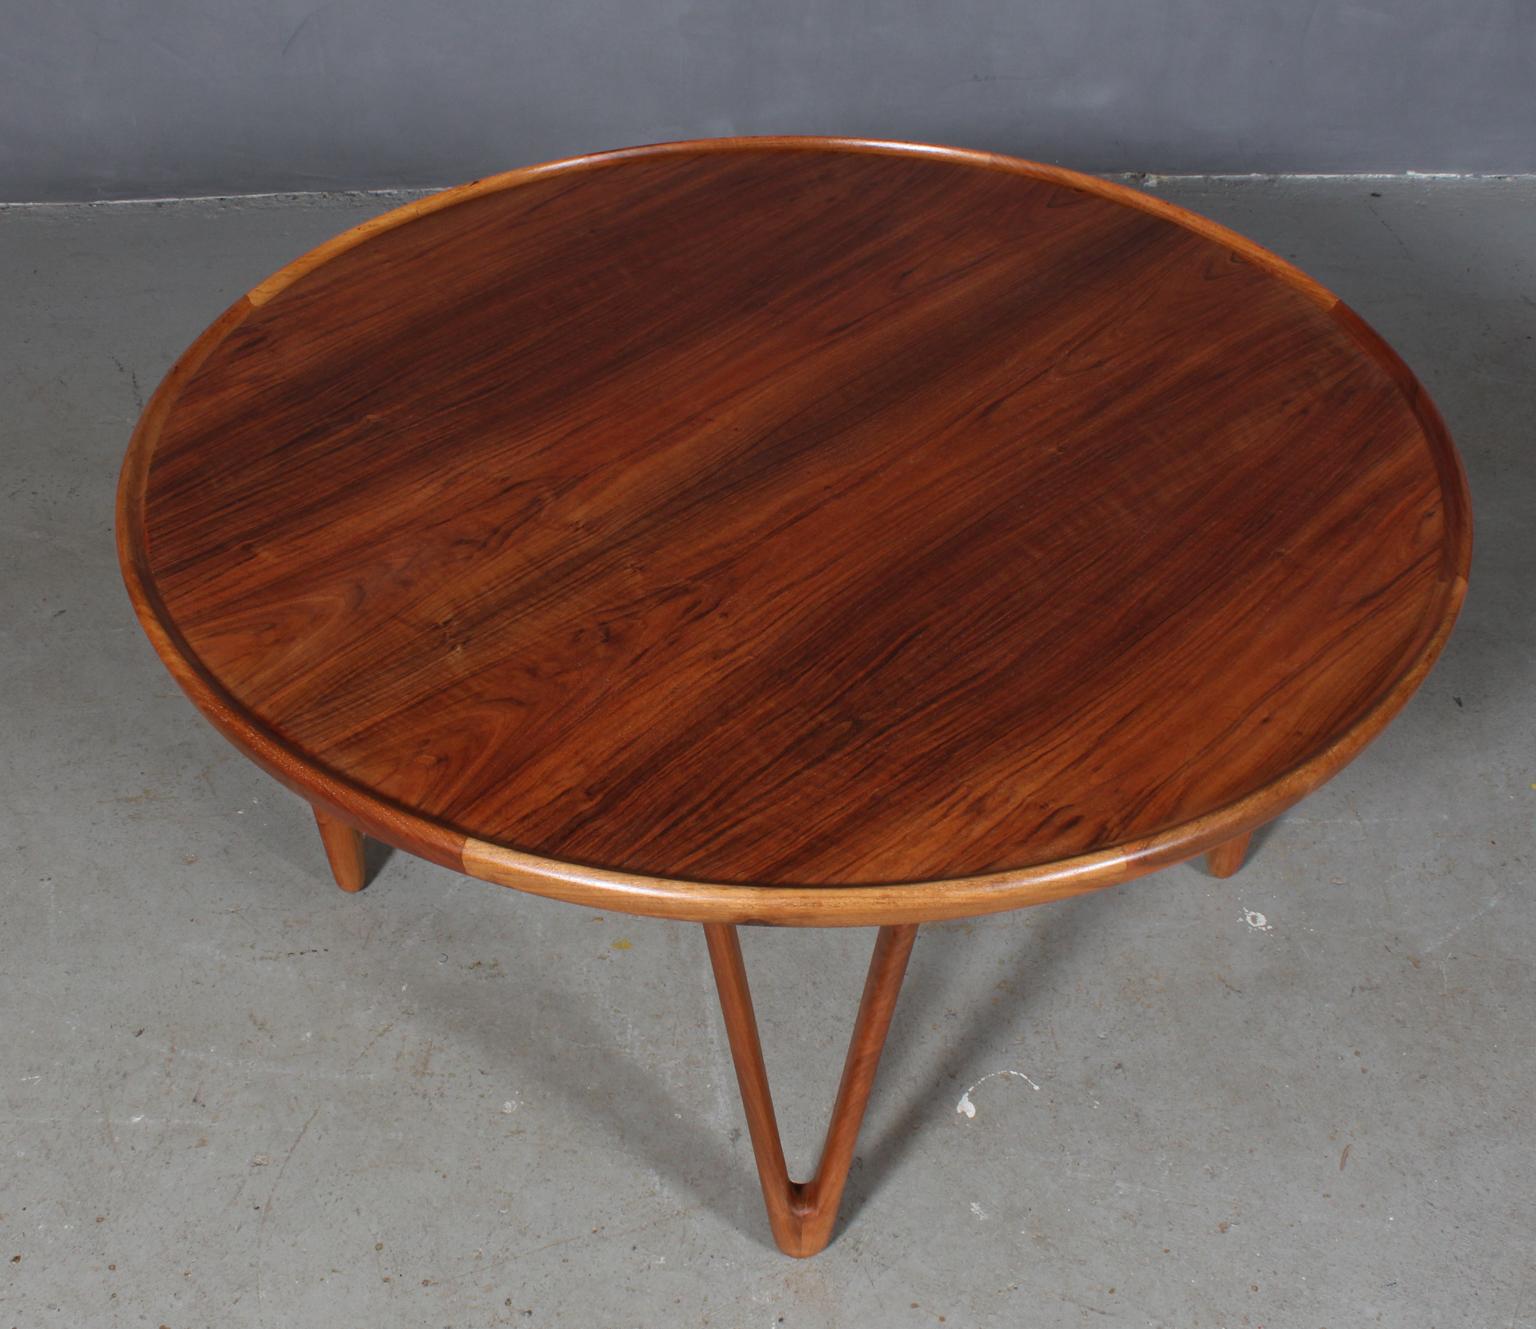 Tove & Edvard Kindt-Larsen, coffee / sofa table made in walnut.

Hairpin legs.

Rarely seen model.